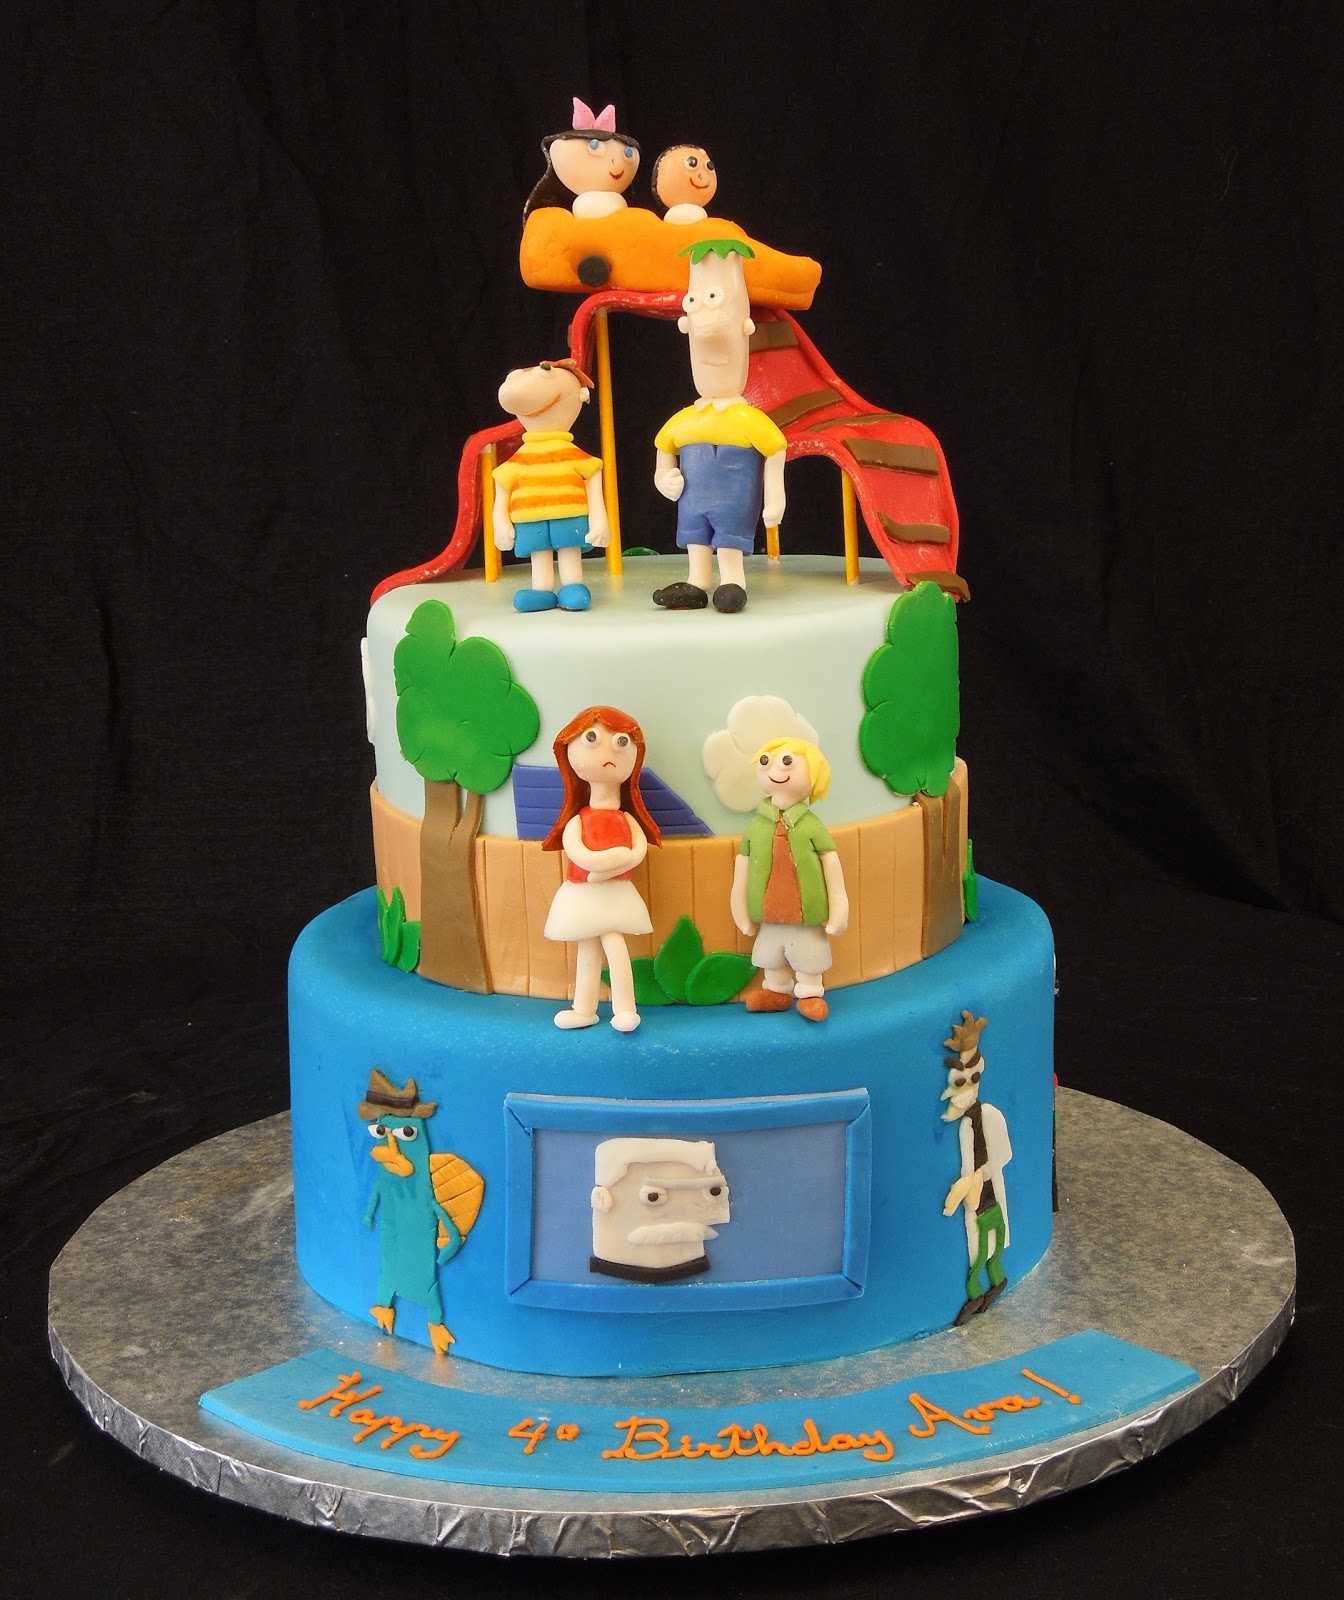 http://1.bp.blogspot.com/-rJhPUW26tdY/UF-uHUM_uzI/AAAAAAAAA08/Q8S_Kp2jBWo/s1600/Phineas+and+Ferb+Birthday+Cake.jpg